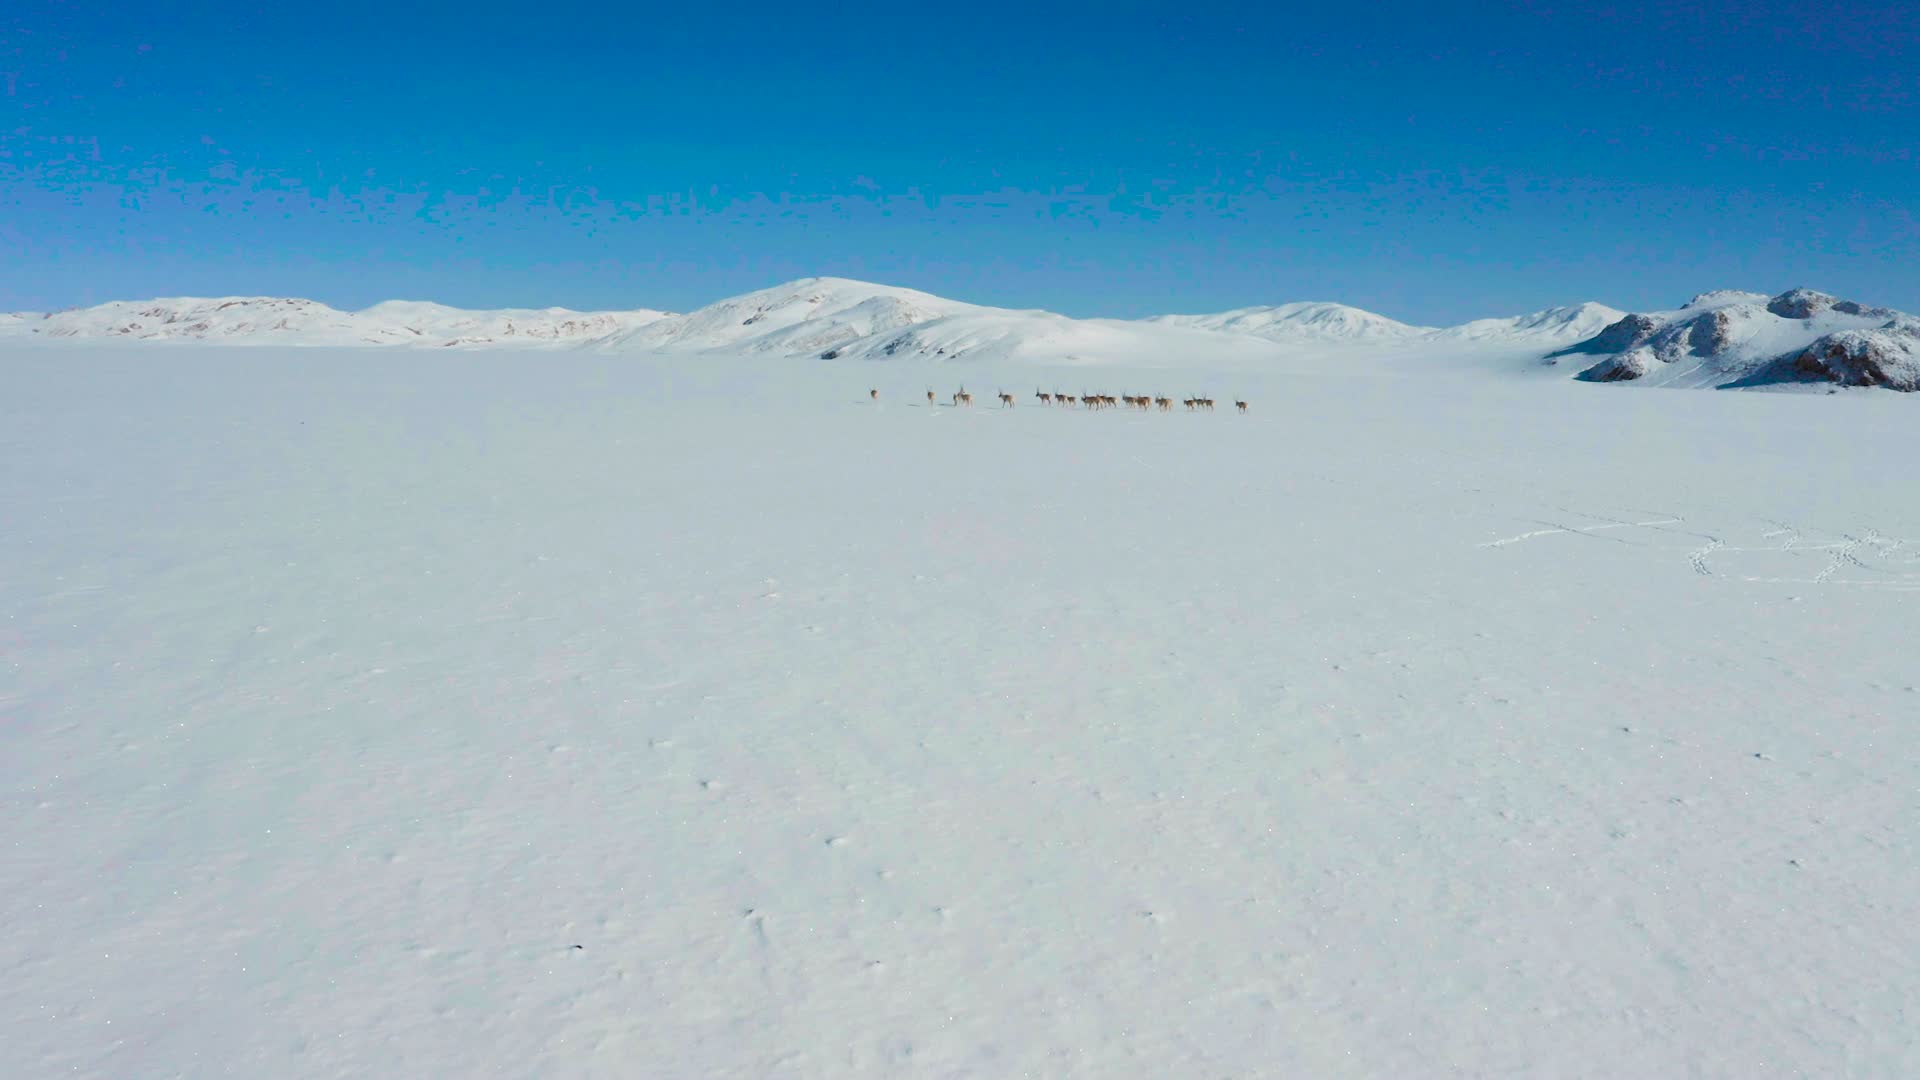 4K高清航拍青藏高原藏羚羊视频的预览图